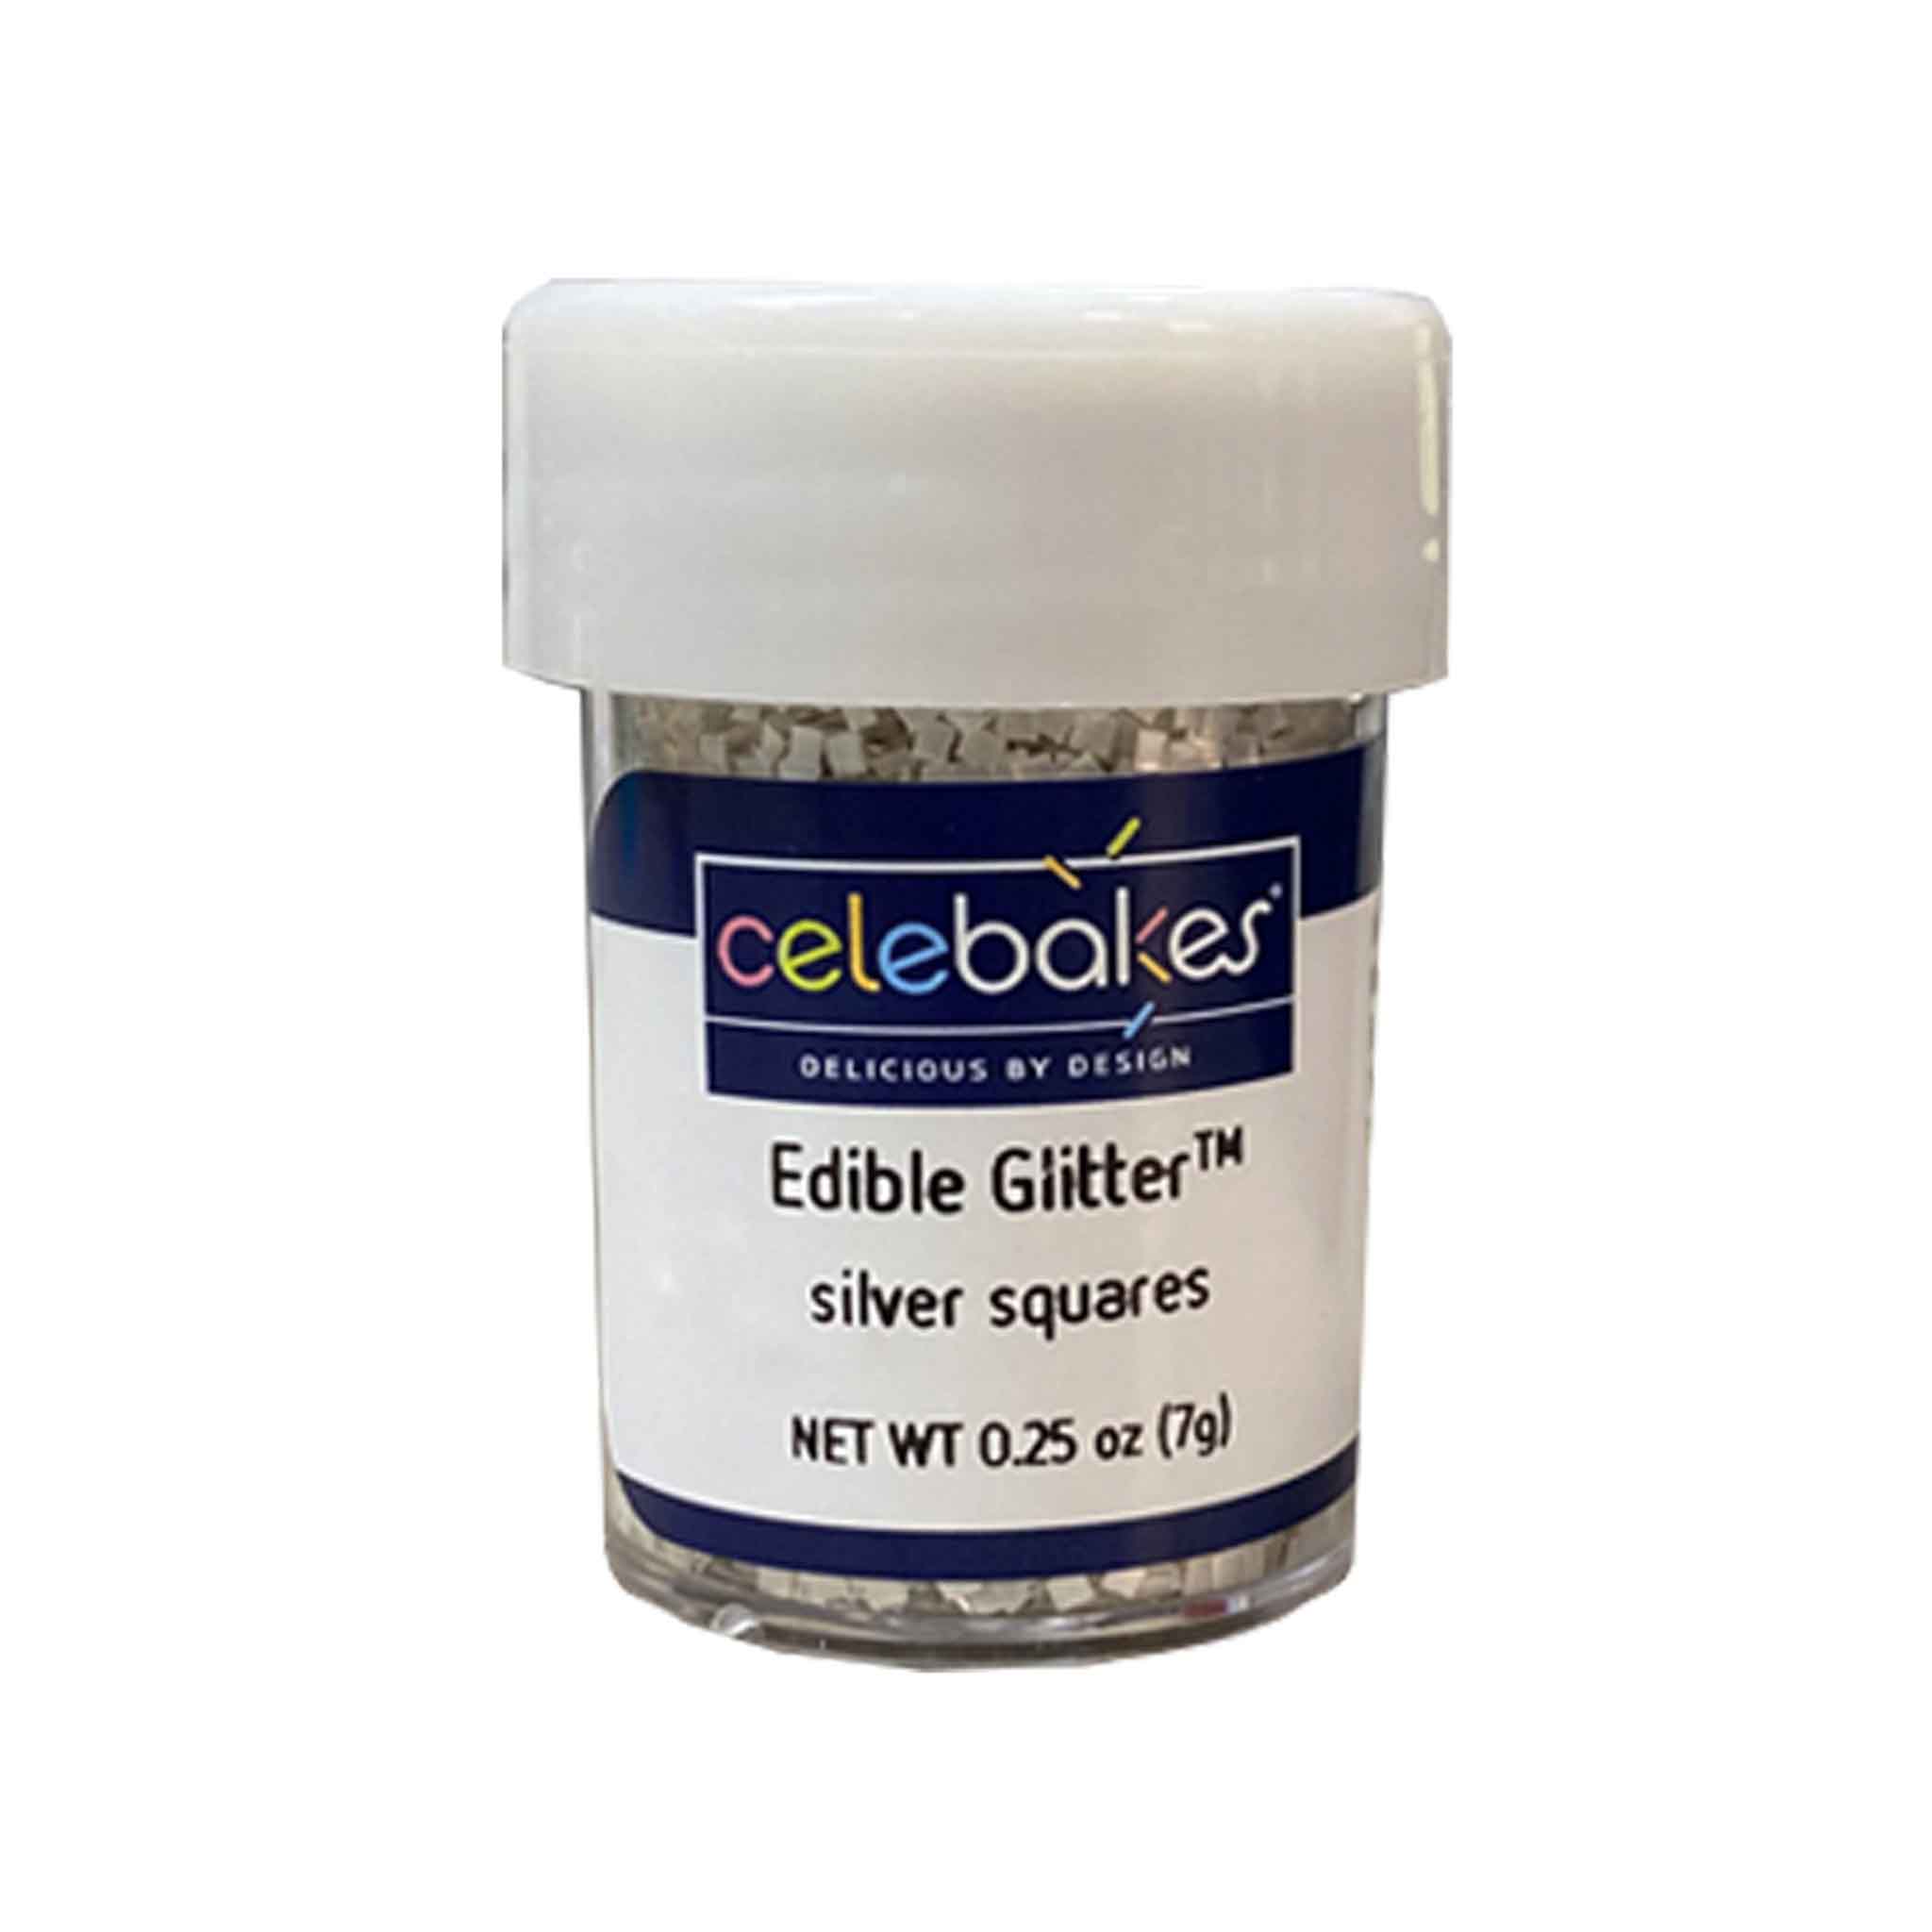 CK Edible Glitter Squares Silver